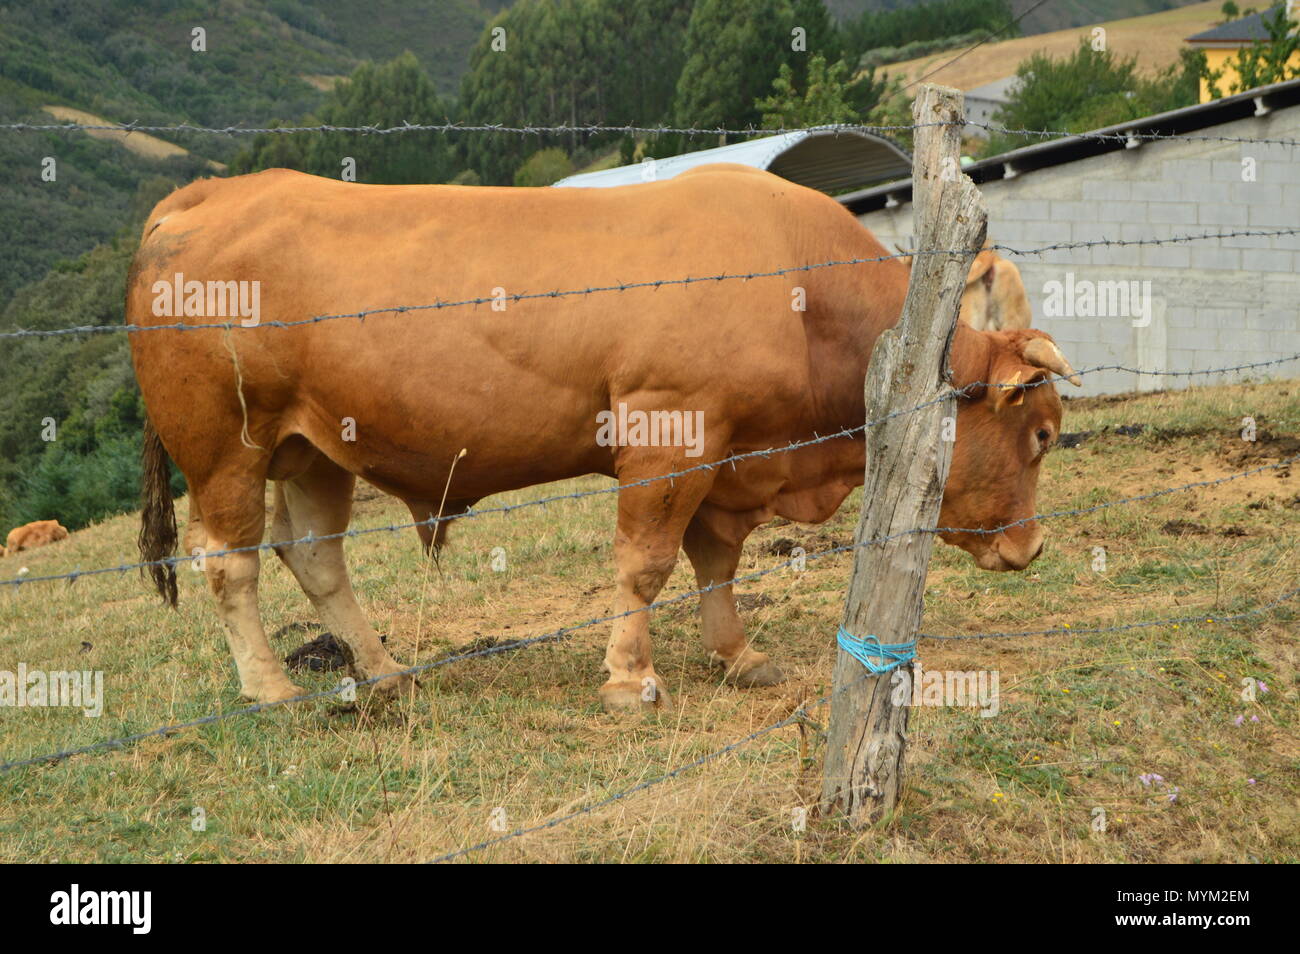 Magnificent Bull Grazing In Rebedul Meadows In Lugo. Animal Landscapes Nature. August 18, 2016. Rebedul Becerrea Lugo Galicia Spain. Stock Photo